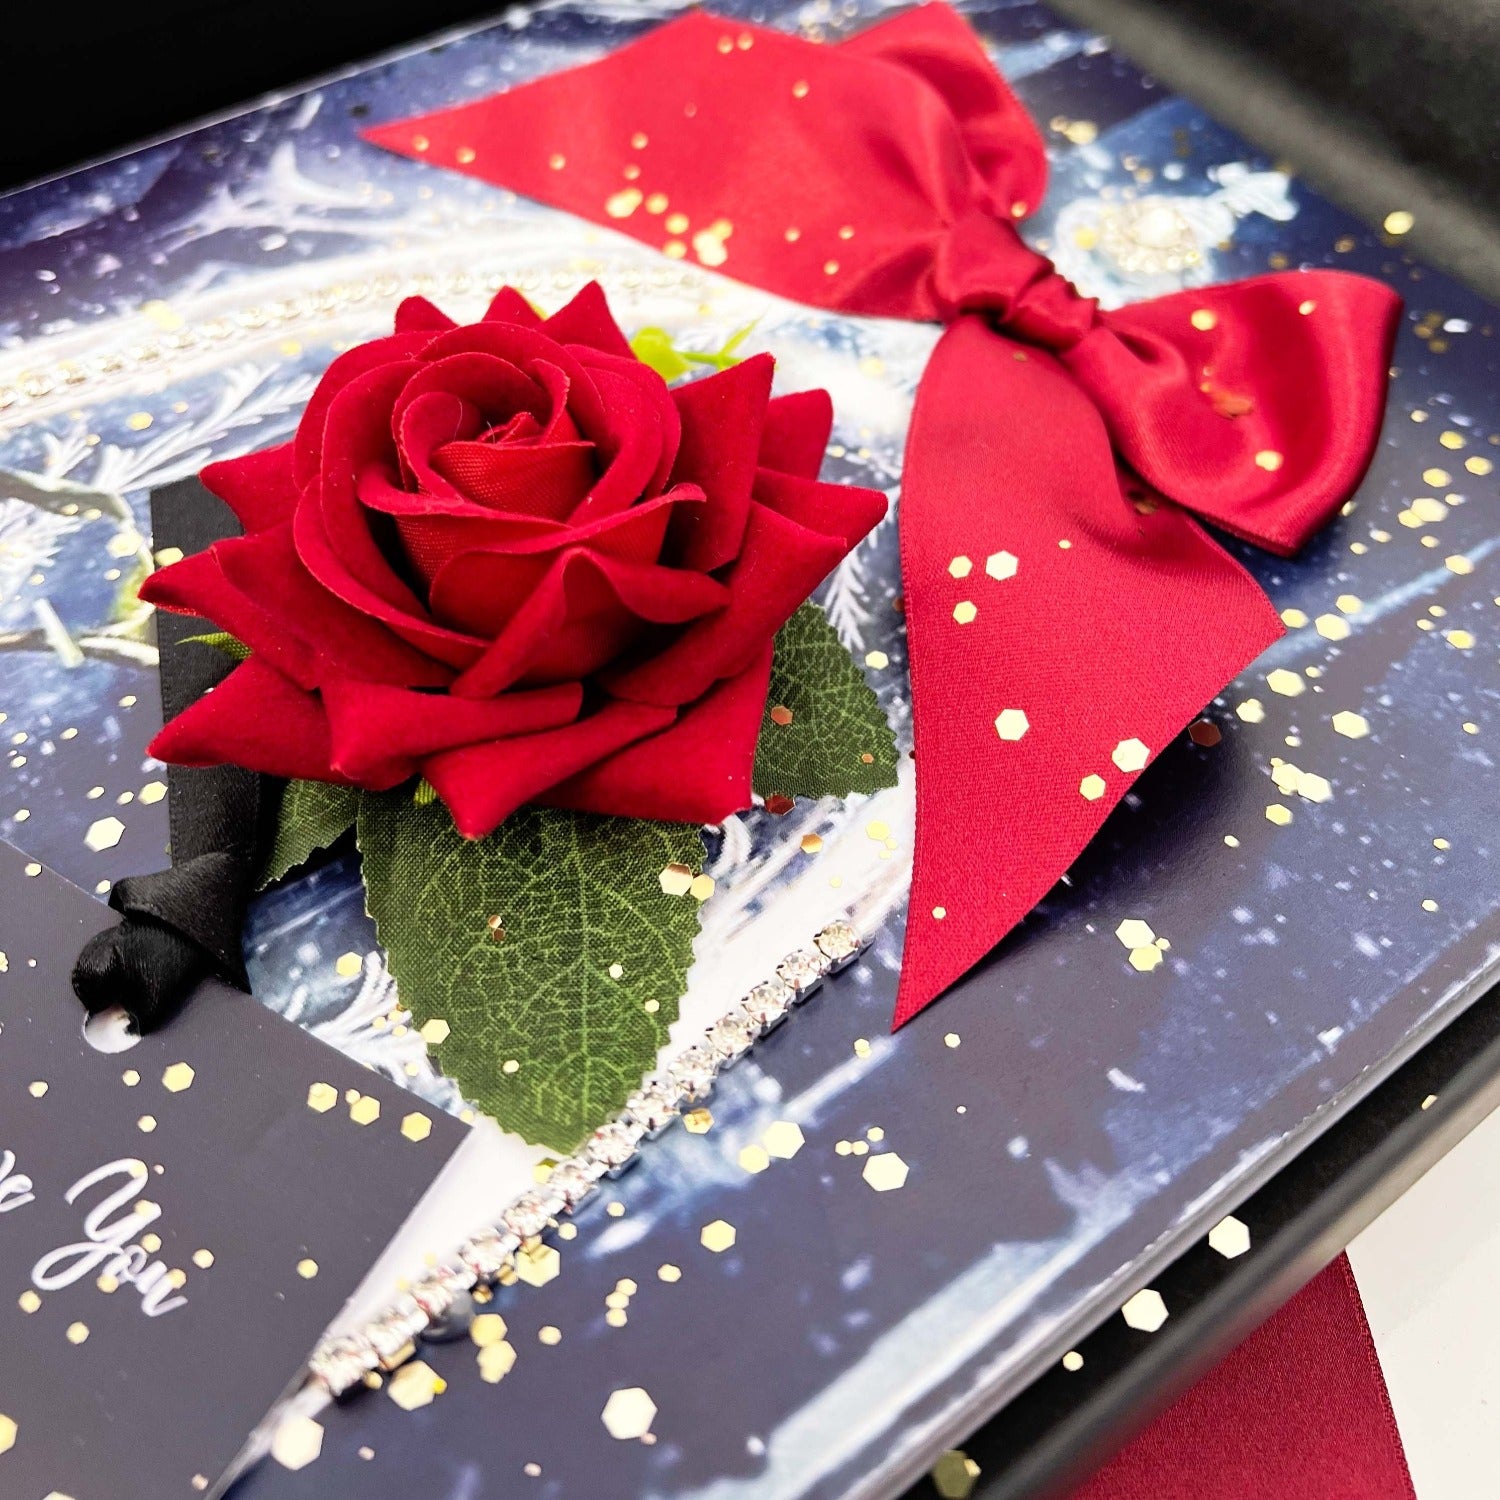 Fairytale scented luxury card - Everlasting rose to symbolise everlasting love